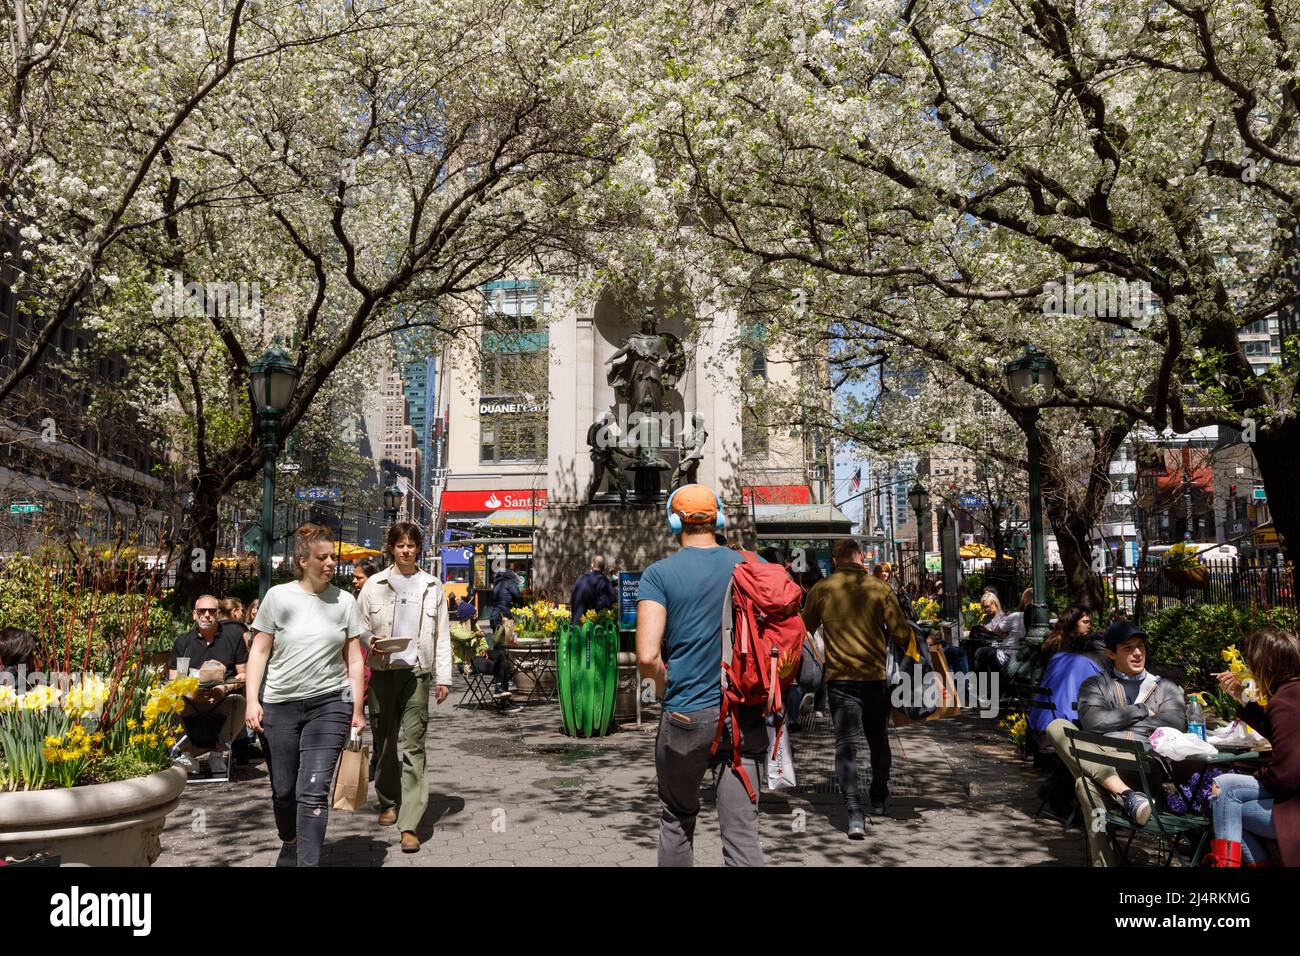 Herald Square in Spring ist gefüllt mit blühenden Bäumen, Midtown, New York, NY, USA. Stockfoto